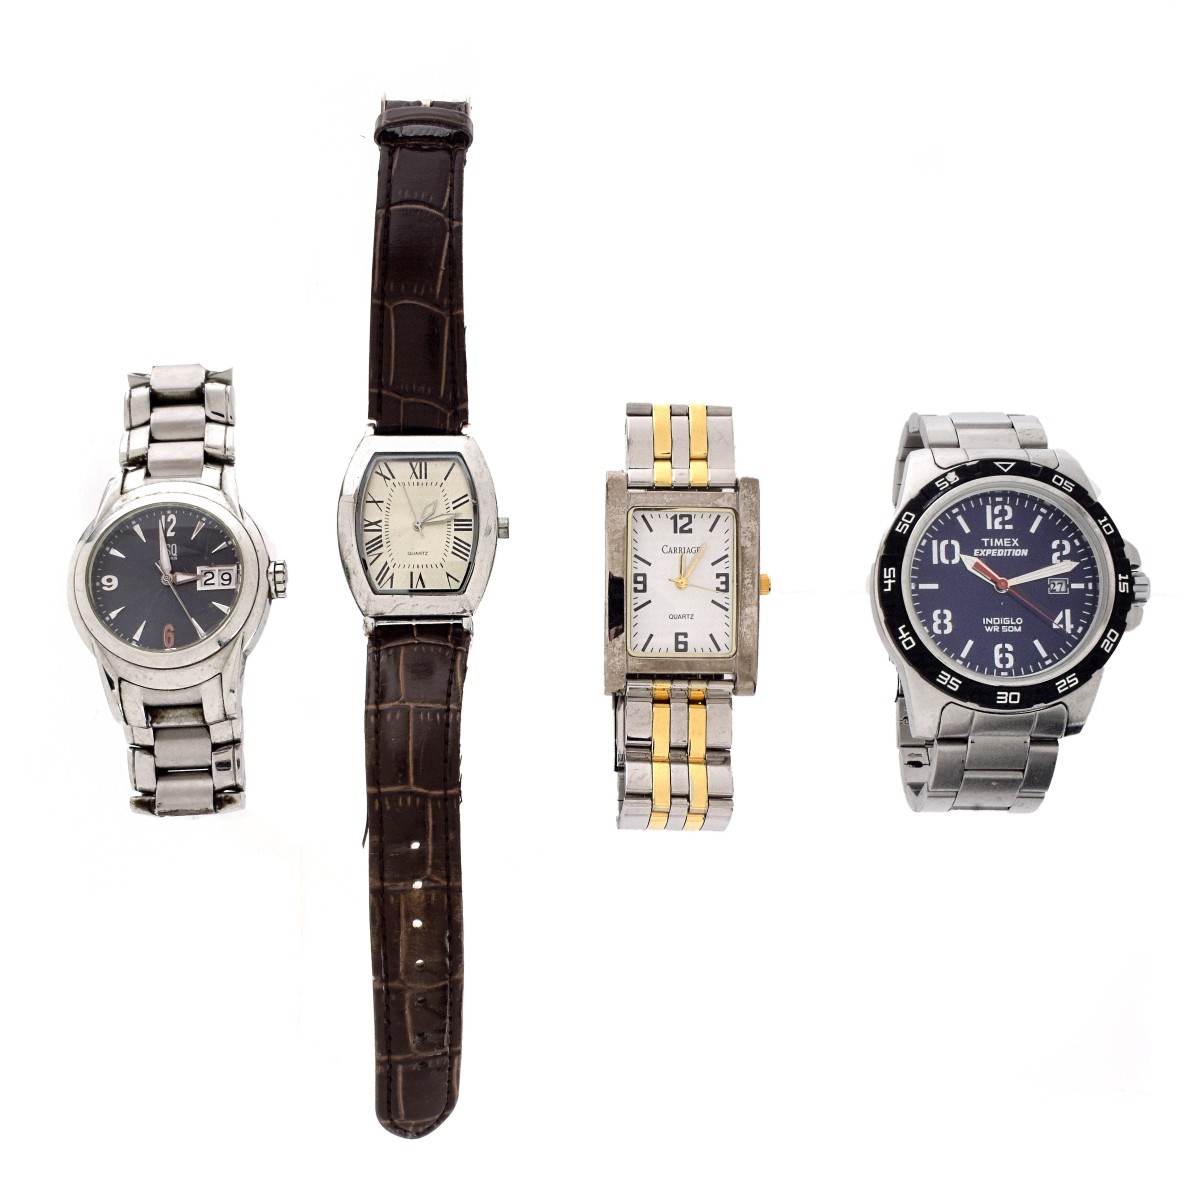 Four Men's Watches